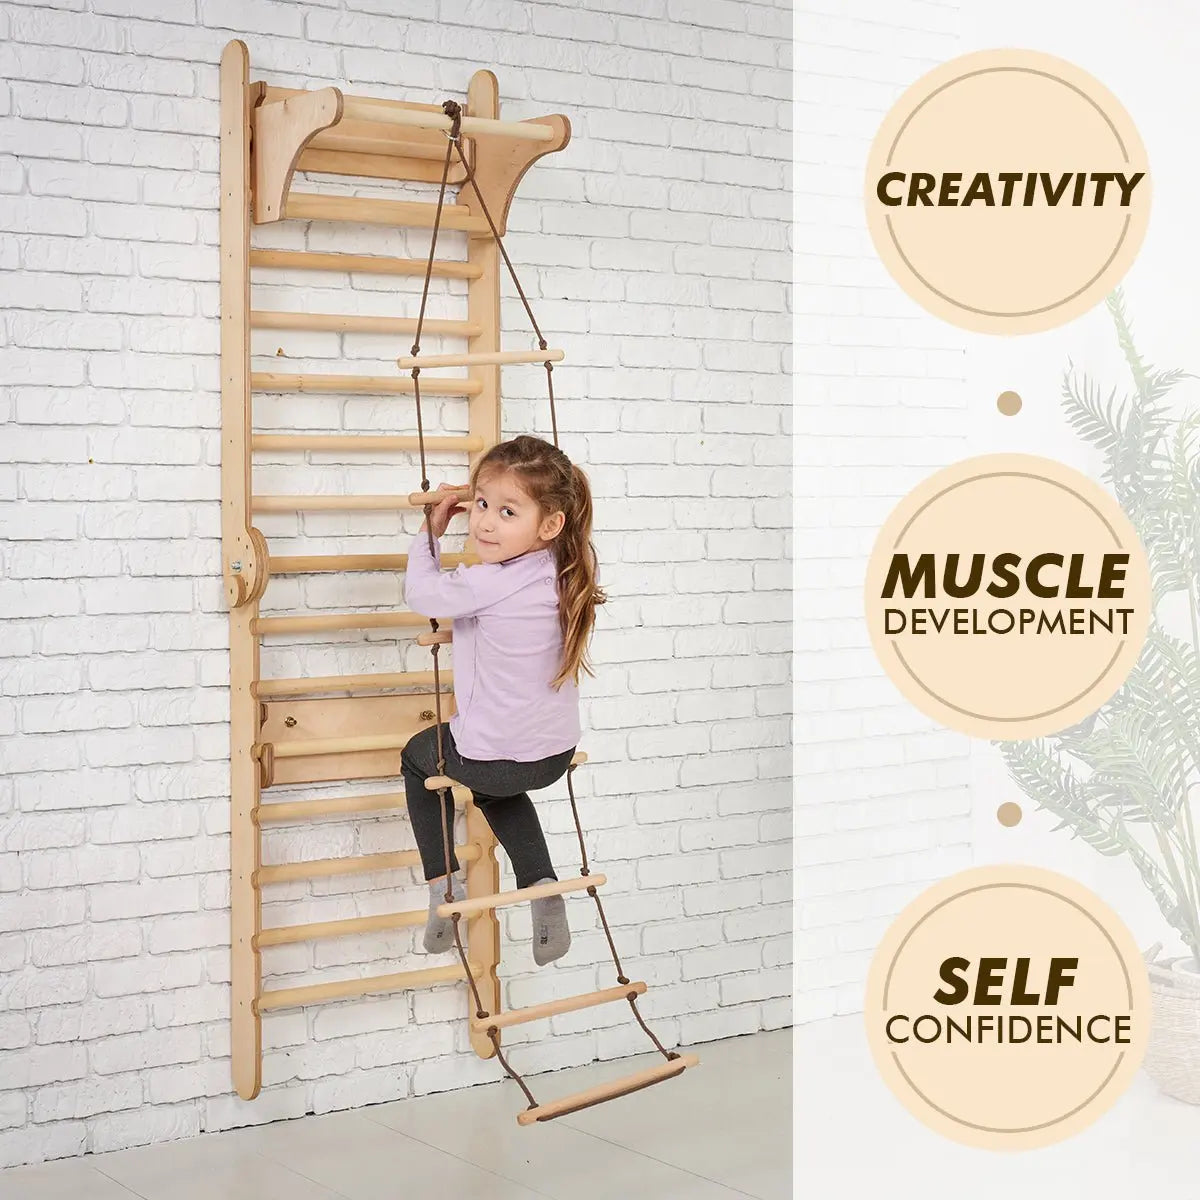 3-in-1 Wooden Swedish Wall Climbing Ladder + Swing Set + Slide Board - Play. Learn. Thrive. ™